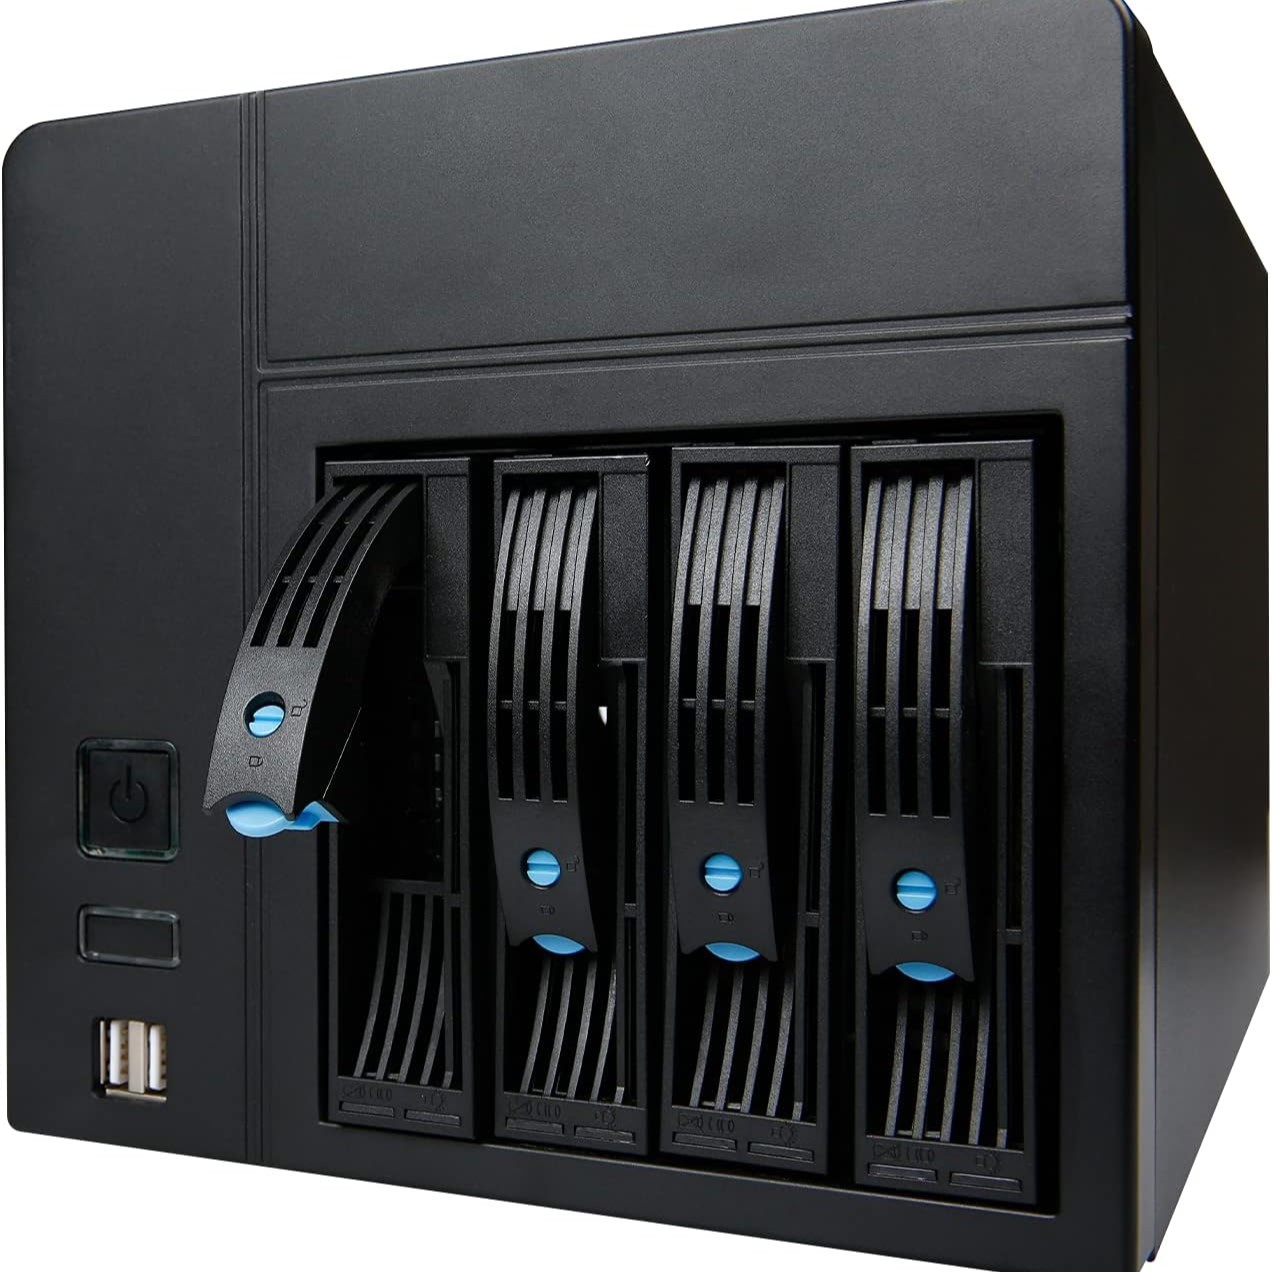 Image of a NAS computer case